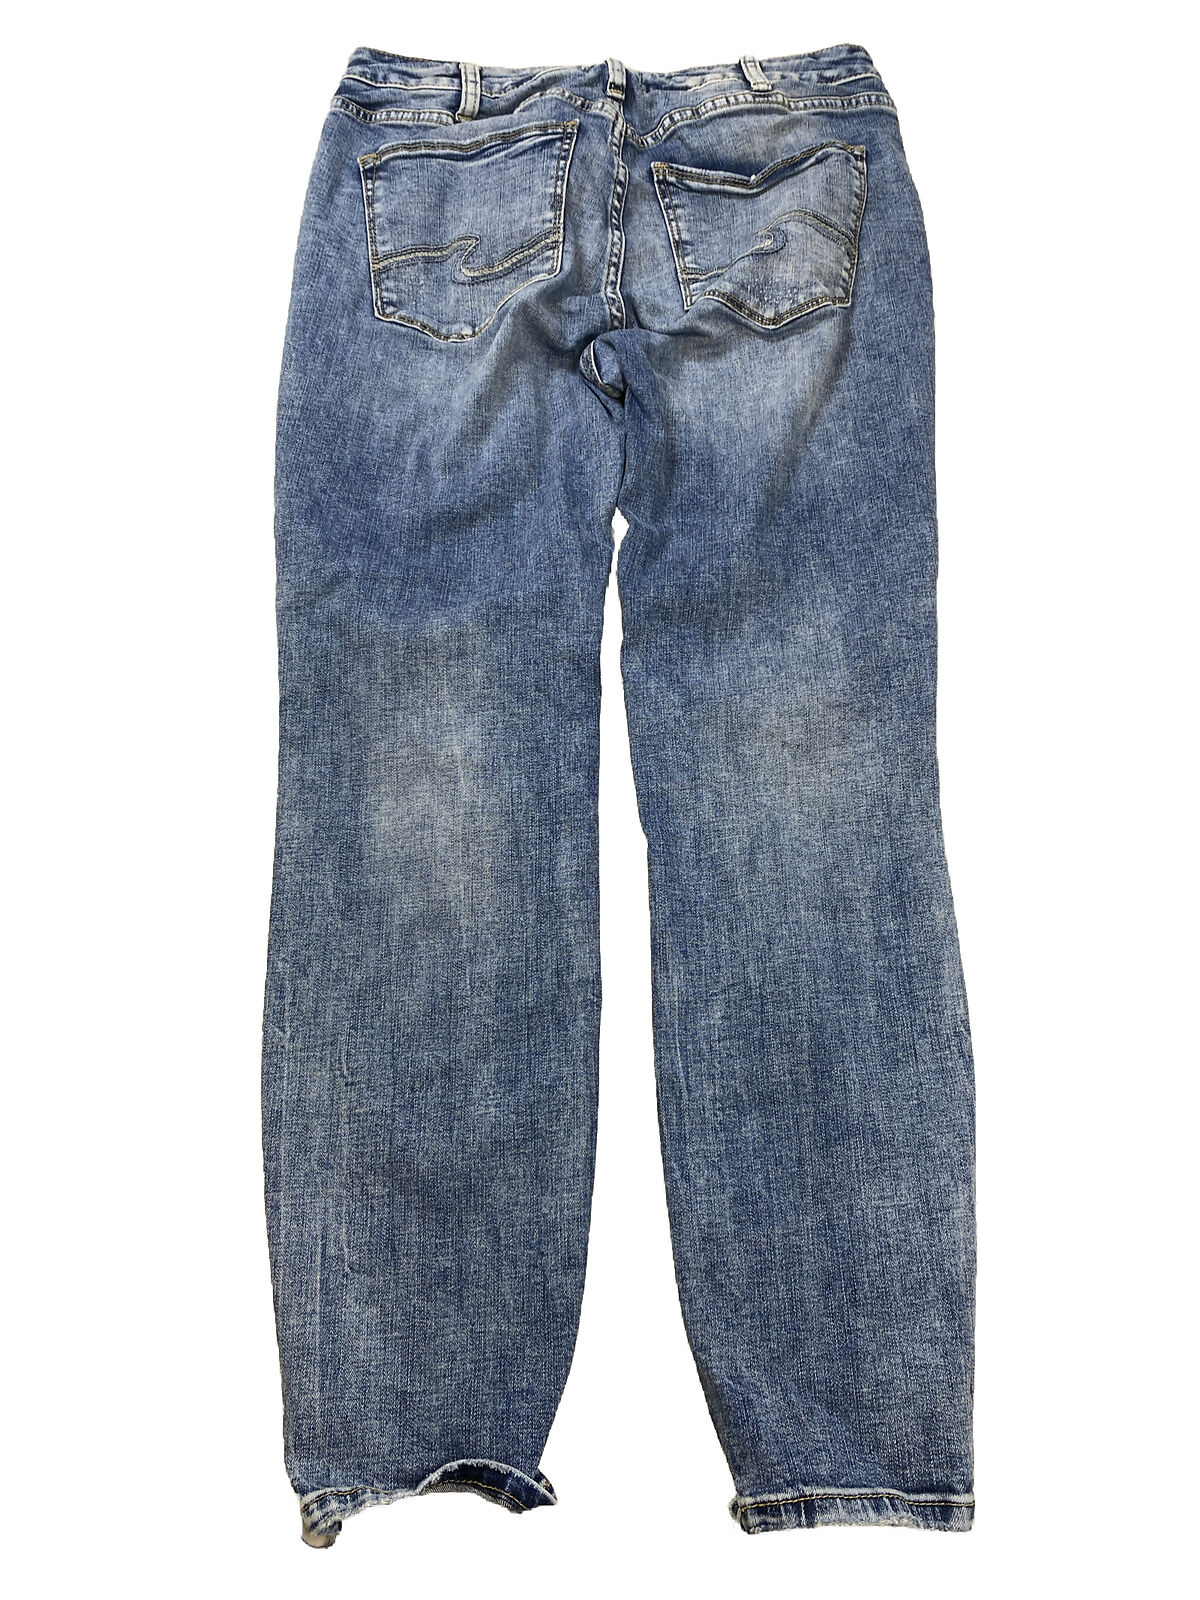 Silver Aiko Skinny Jeans 29x32